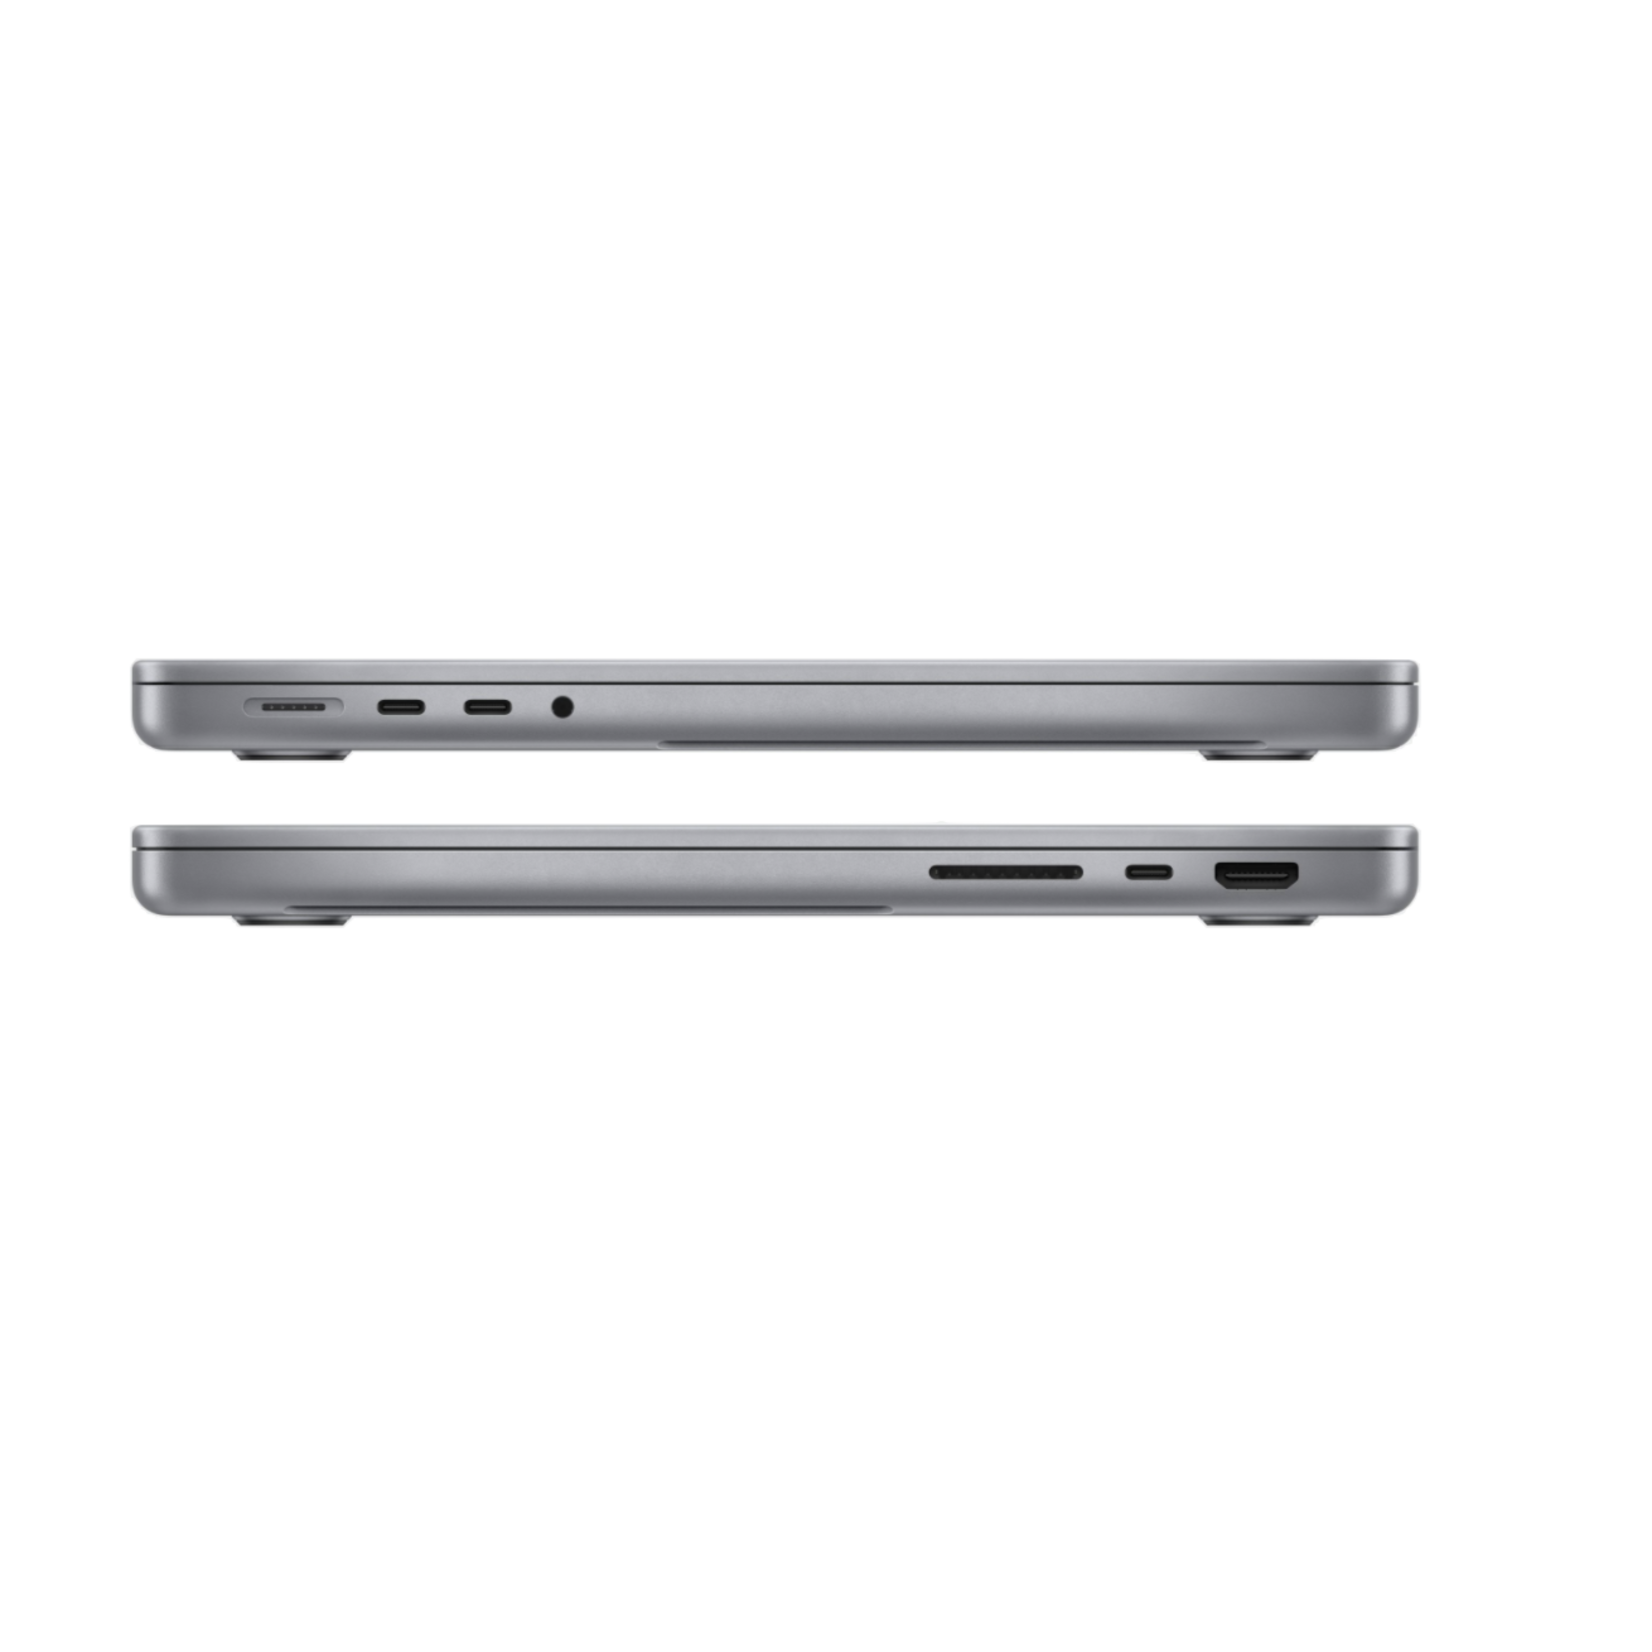 Apple 16" MacBook Pro - M1 Pro - 512GB - Space Gray